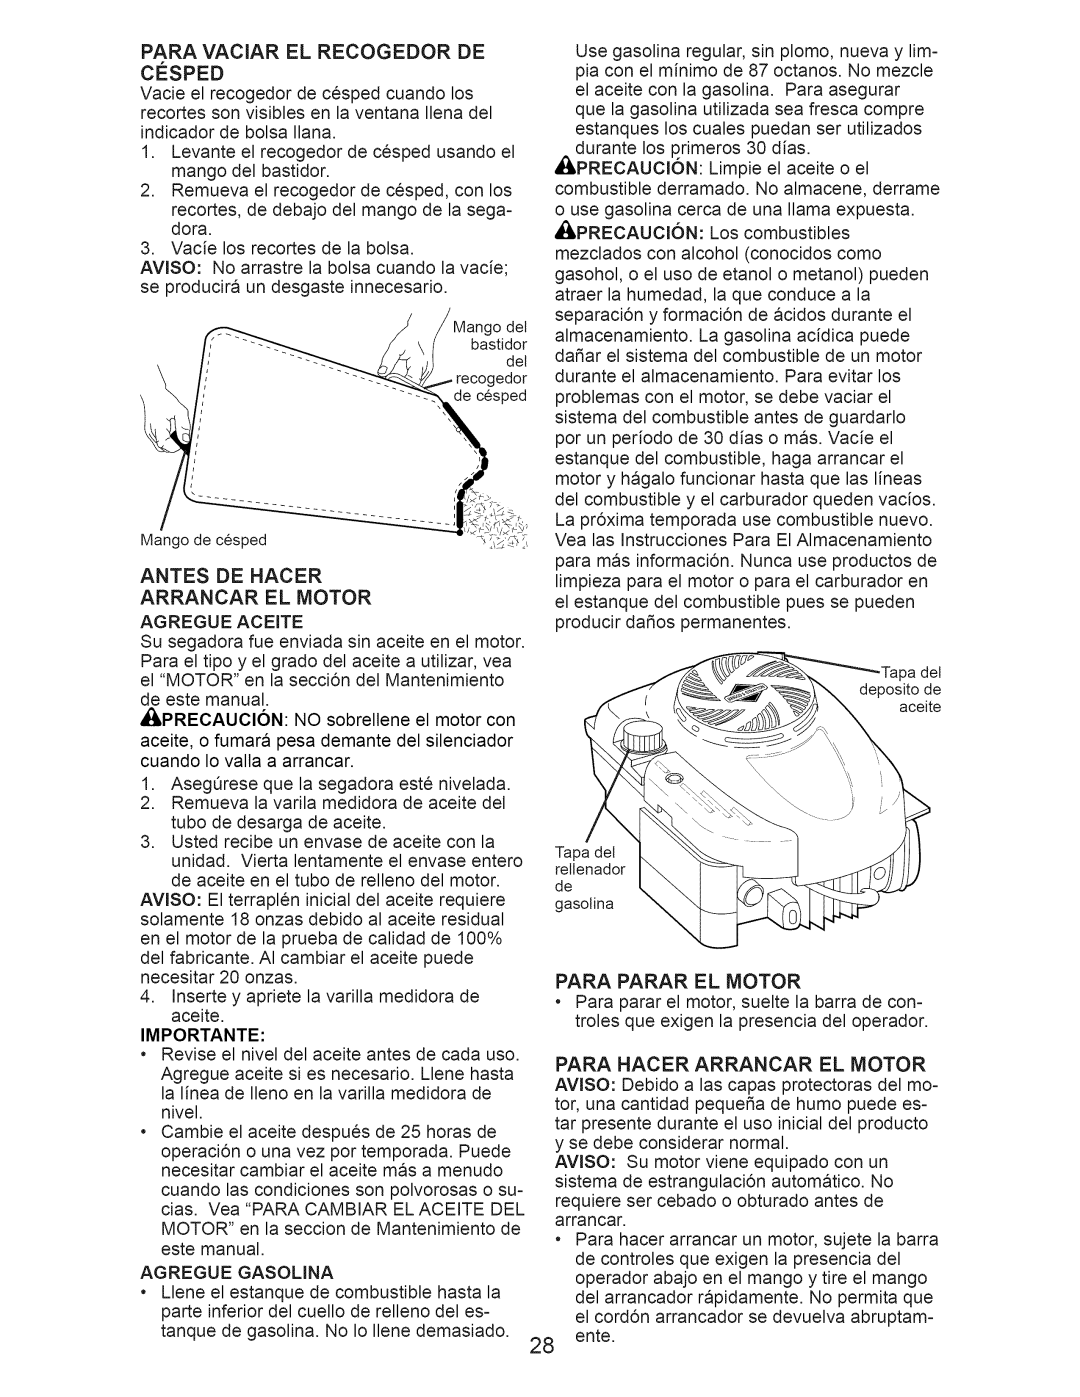 Craftsman 917.374091 owner manual Antes De Hacer Arrancar El Motor, Para Hacer Arrancar El Motor, Importante 